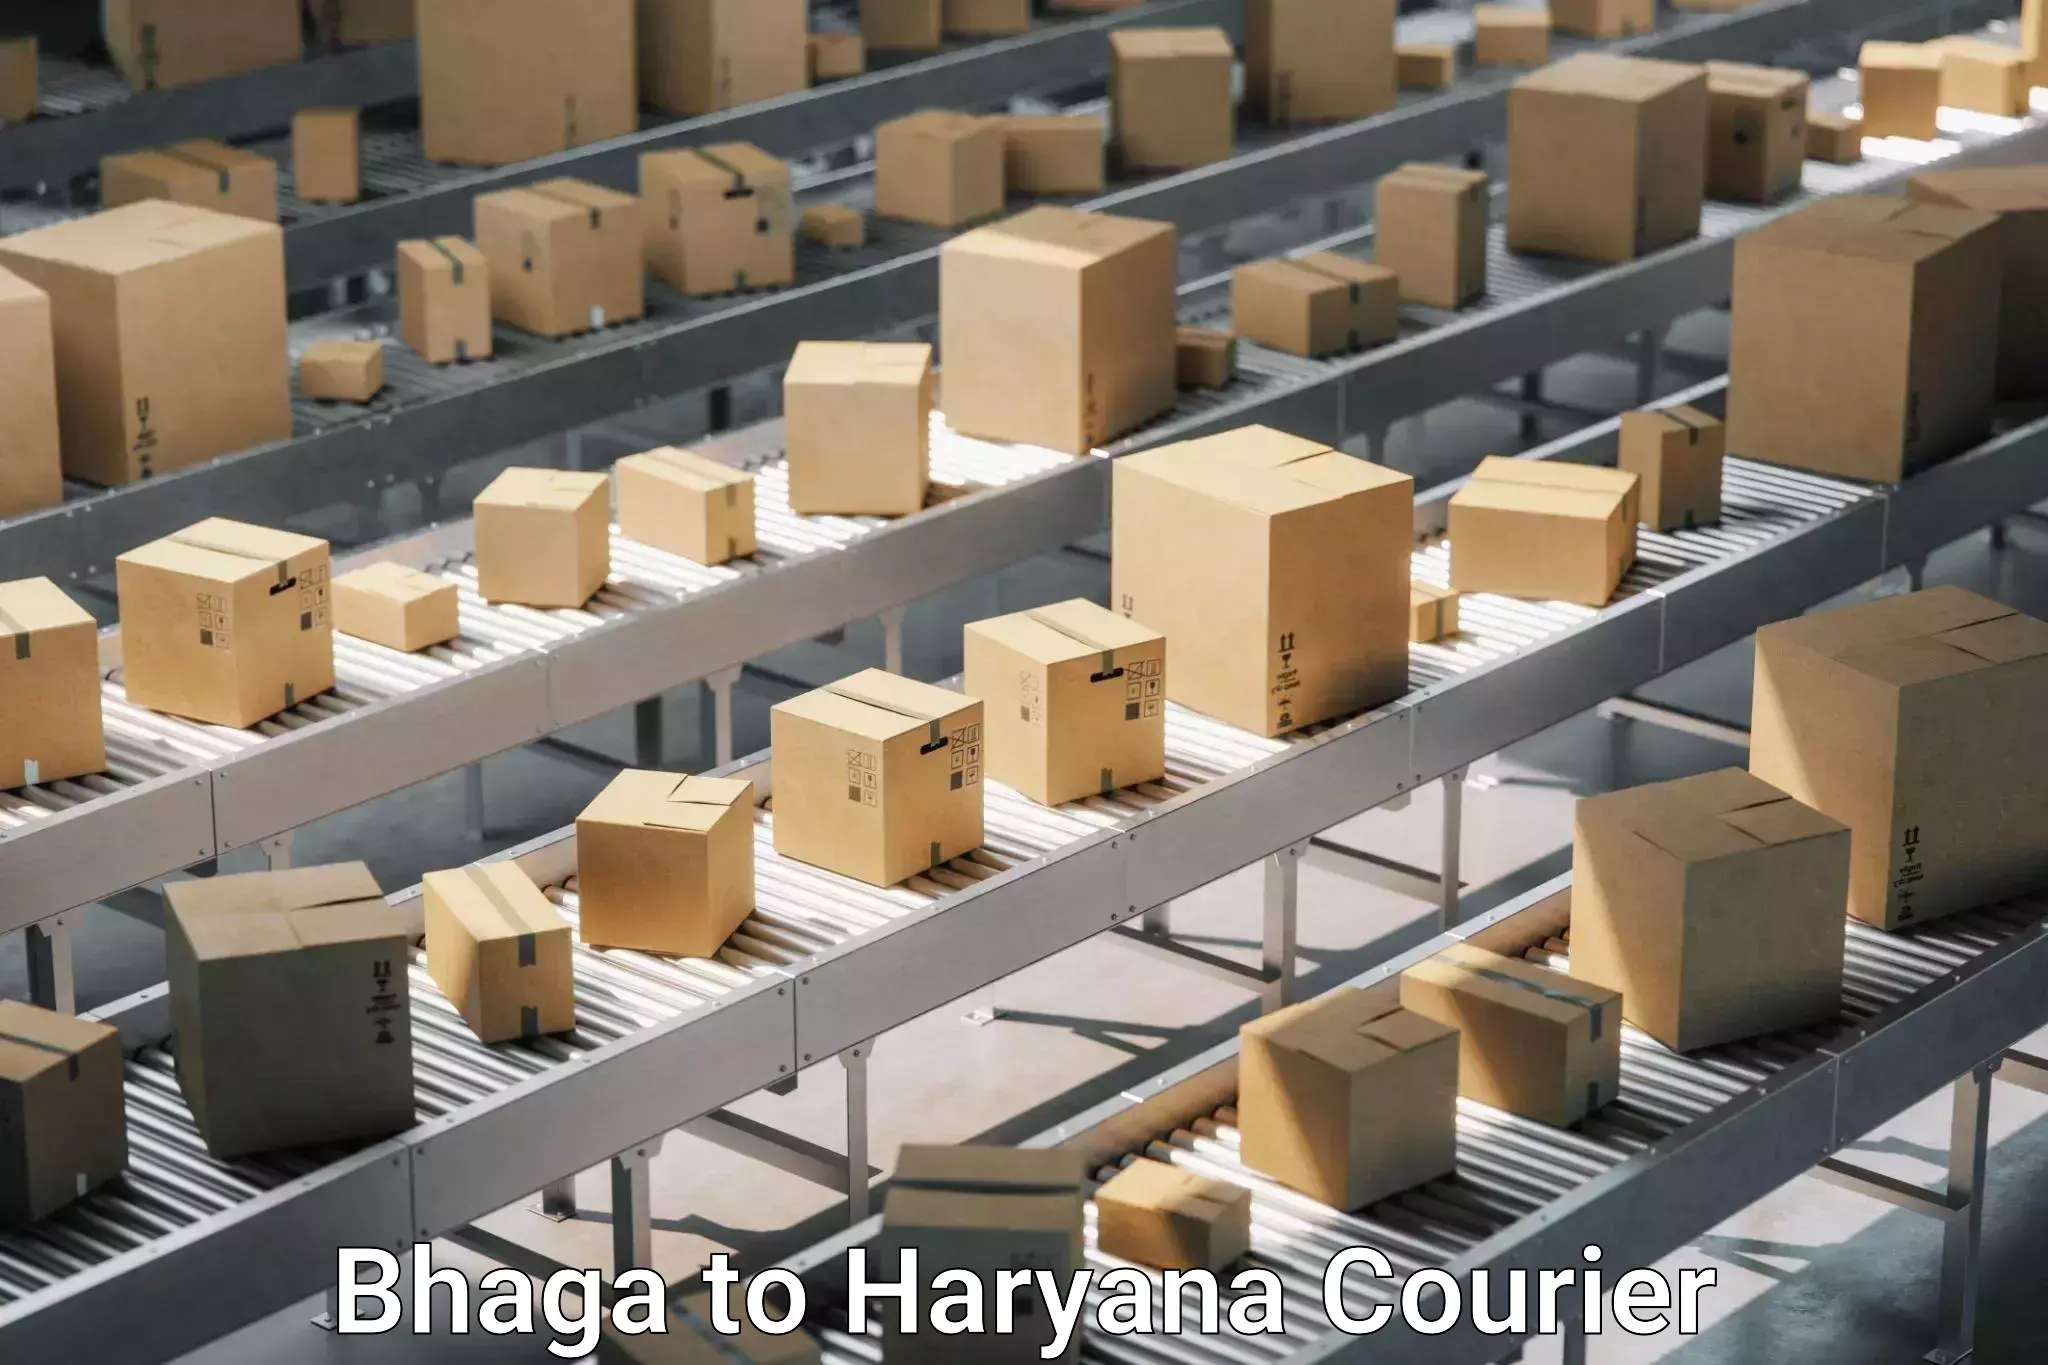 Professional moving company Bhaga to Chirya